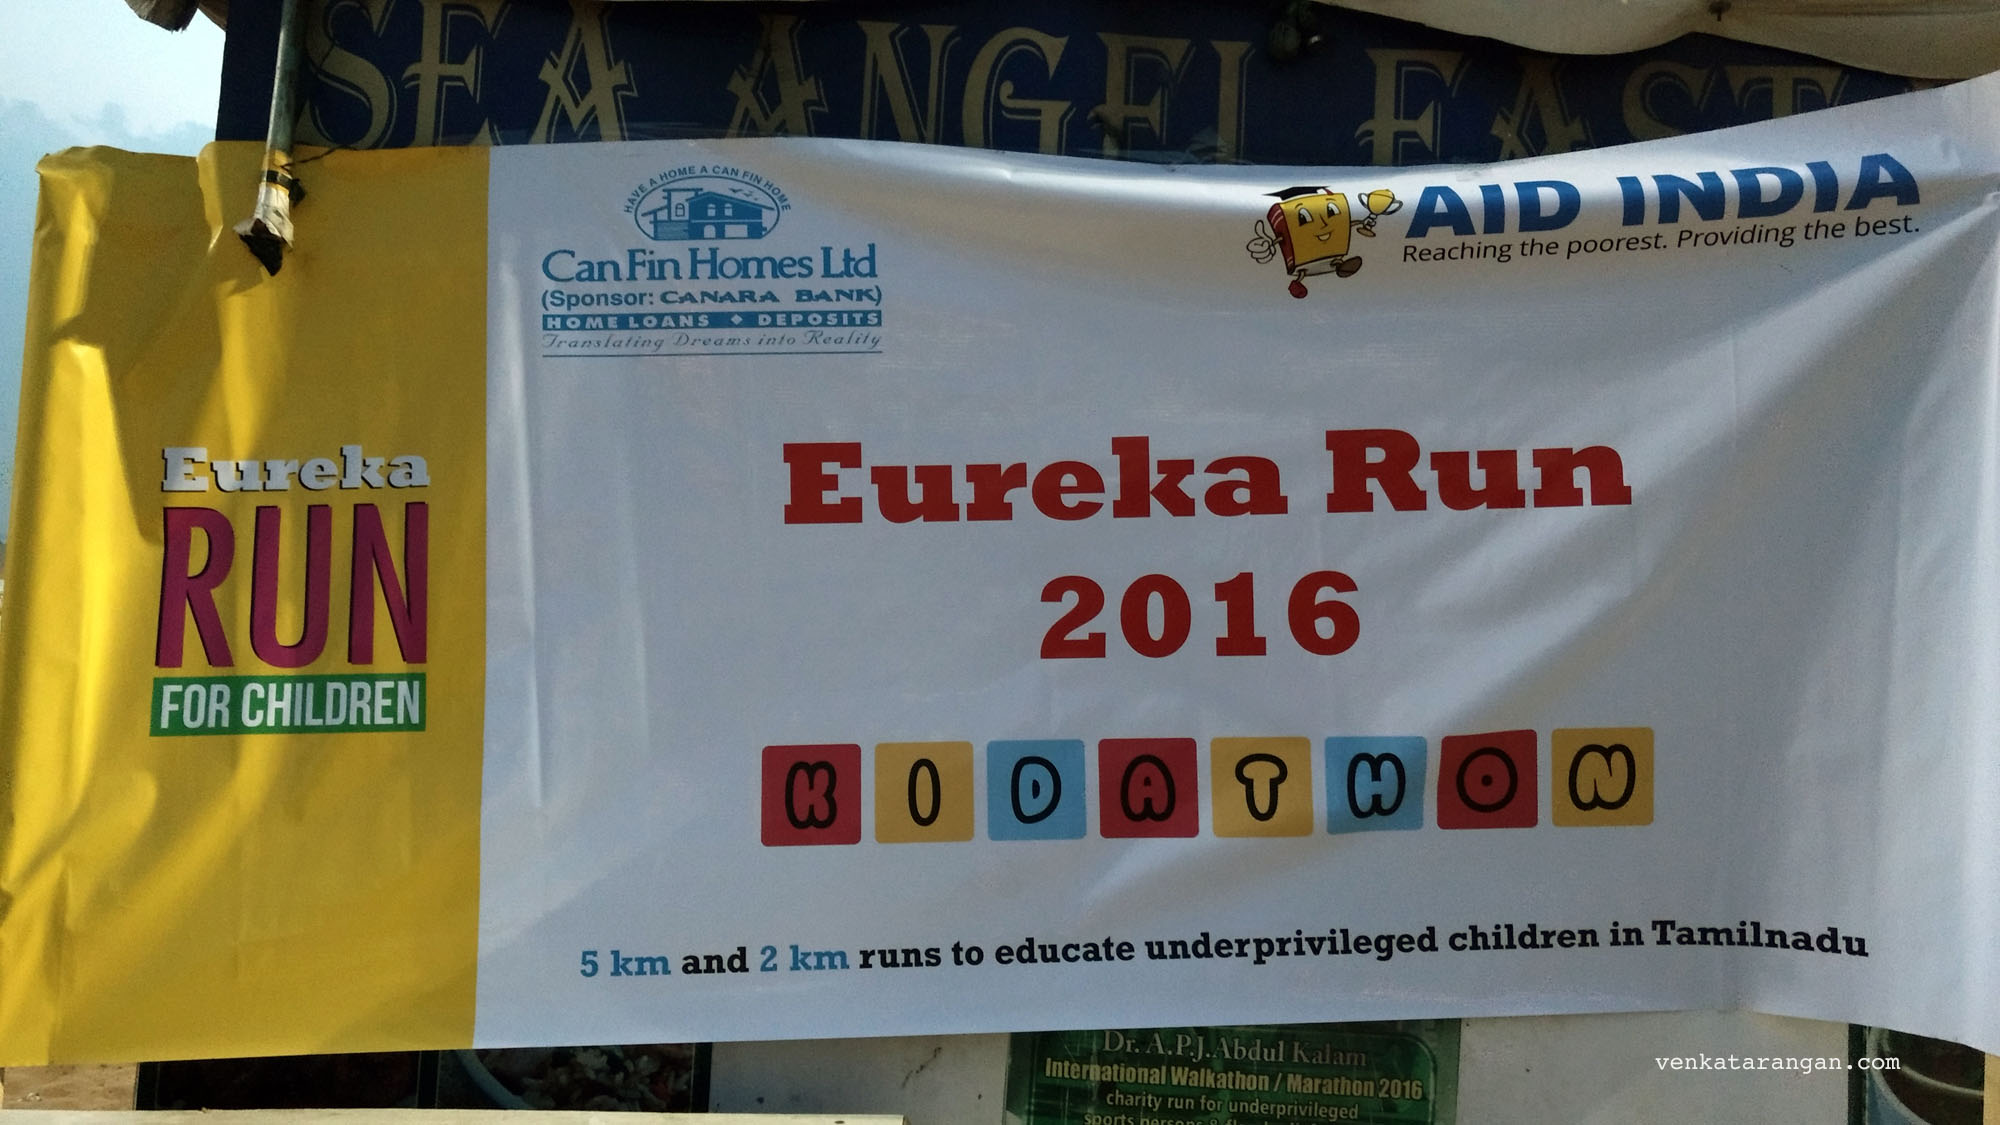 Eureka Run 2016 by AID India